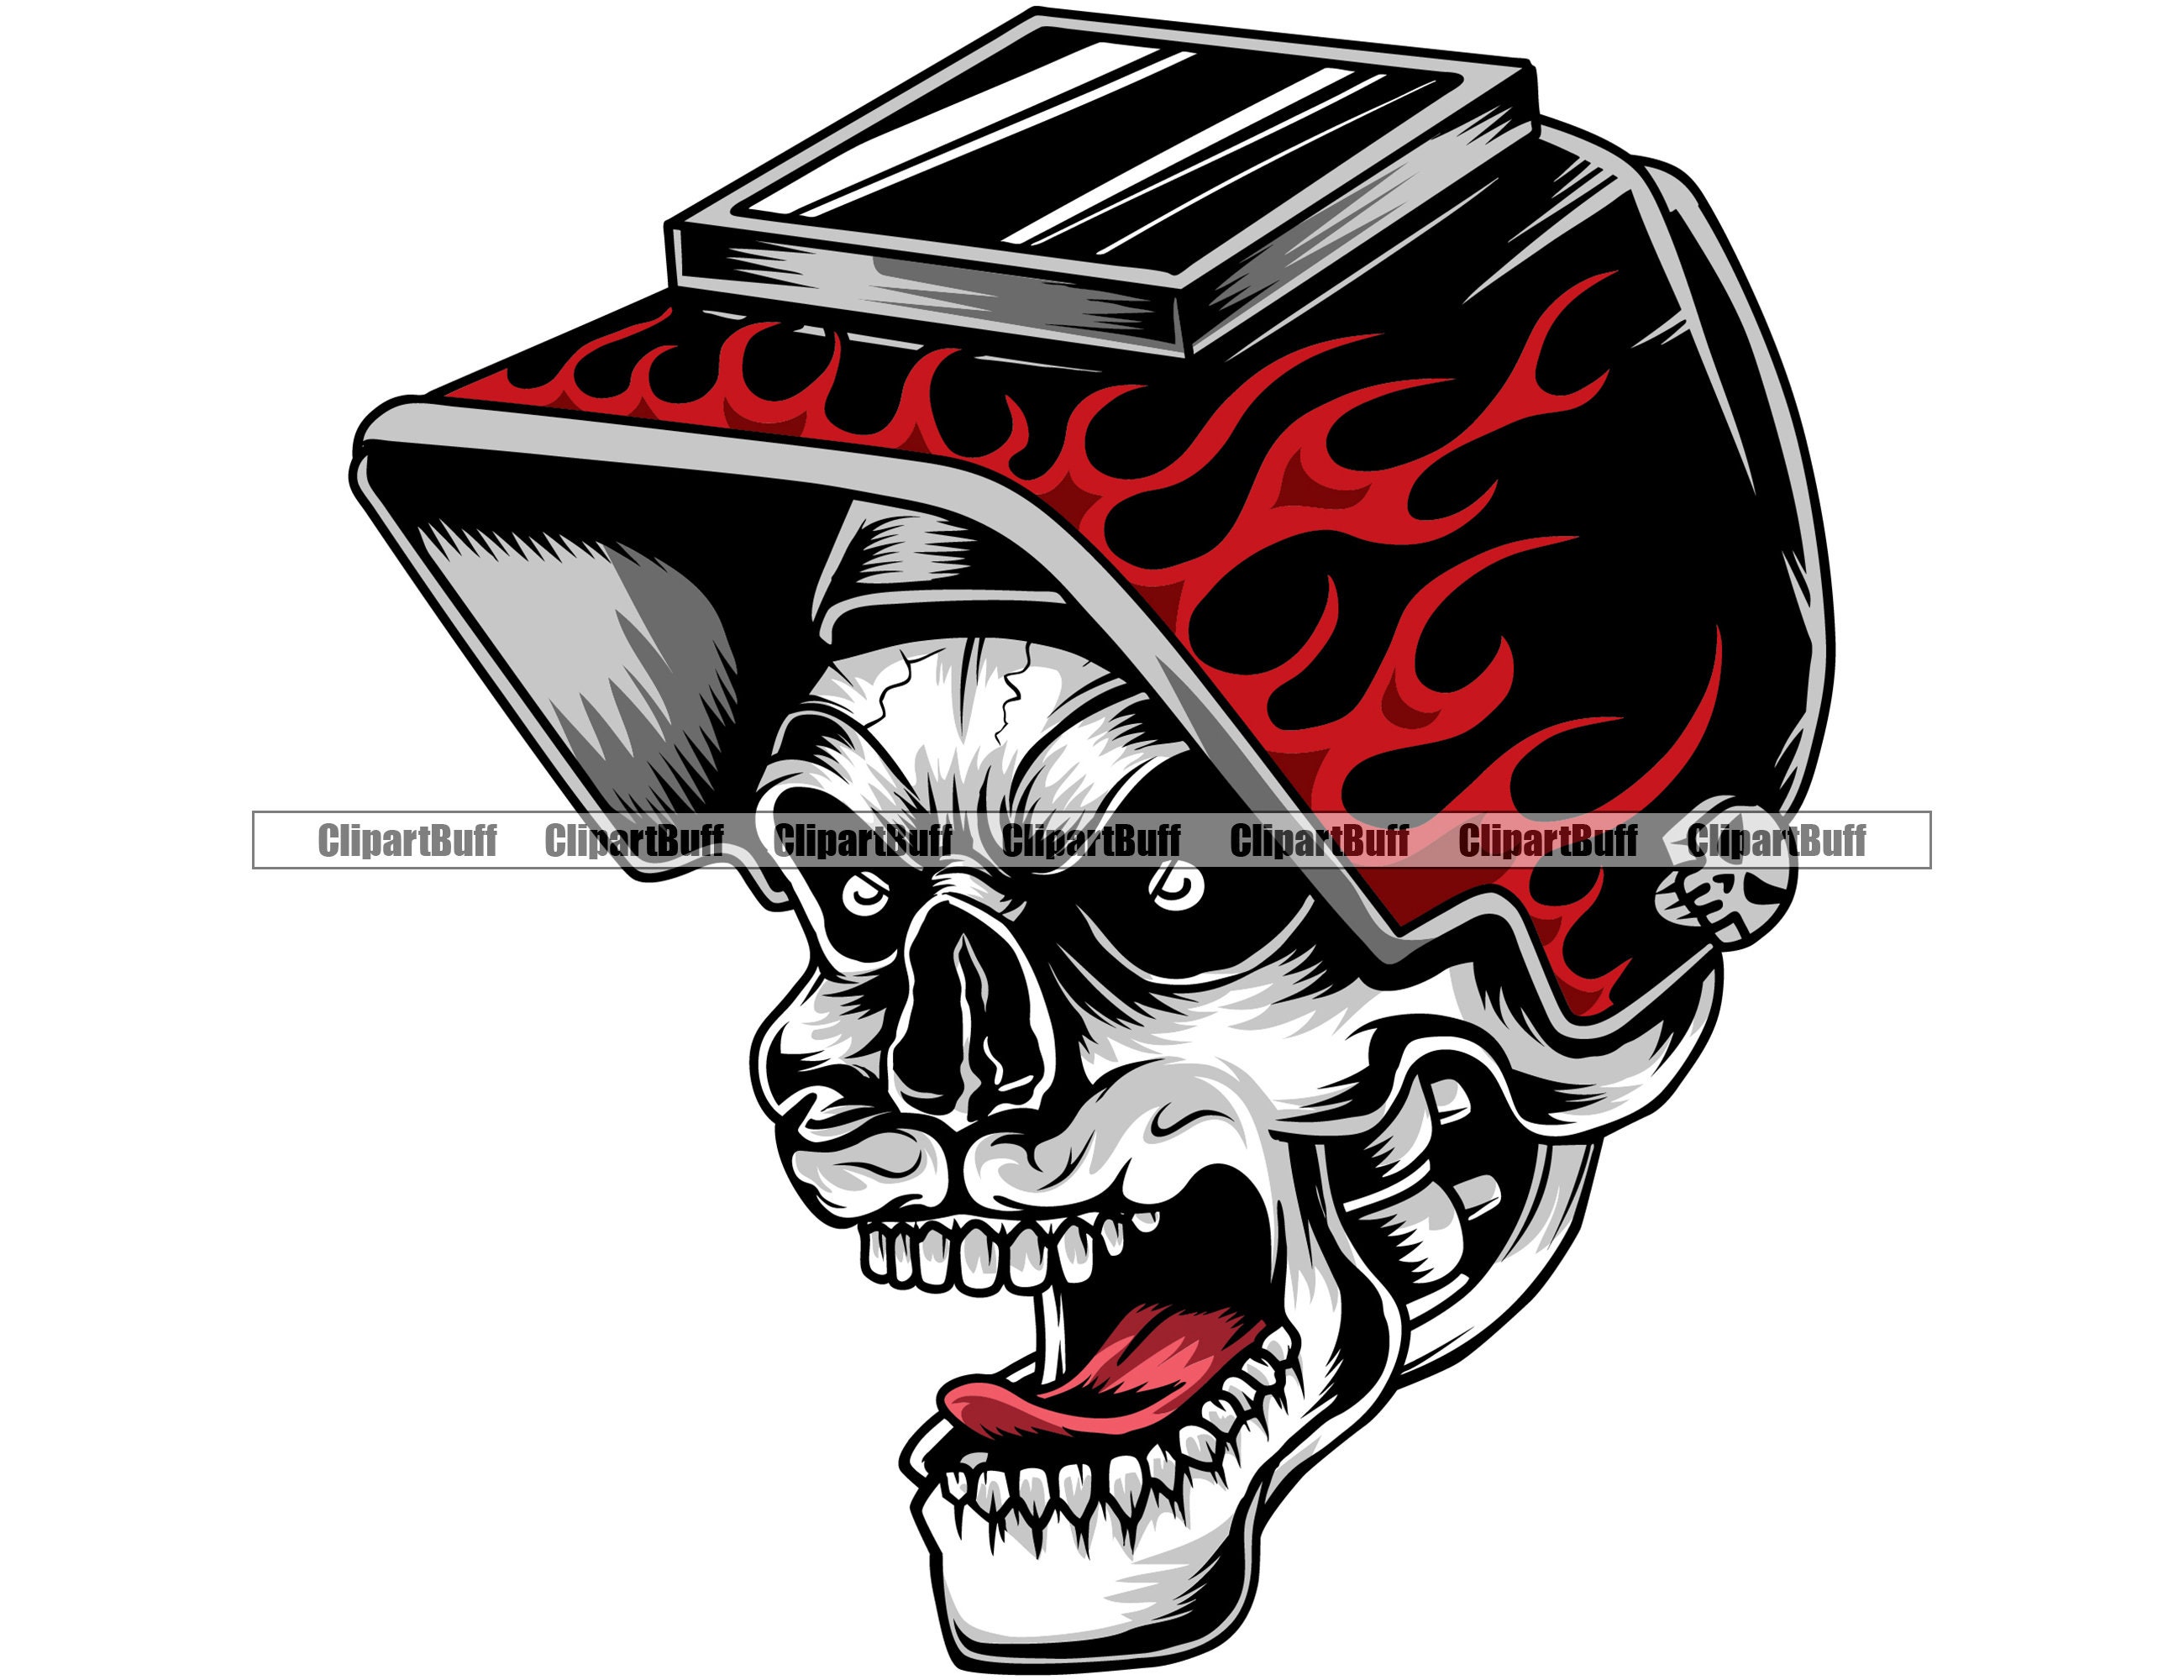 Traditional welder helmet. On IG @rustyshackleferdd : r/TattooDesigns